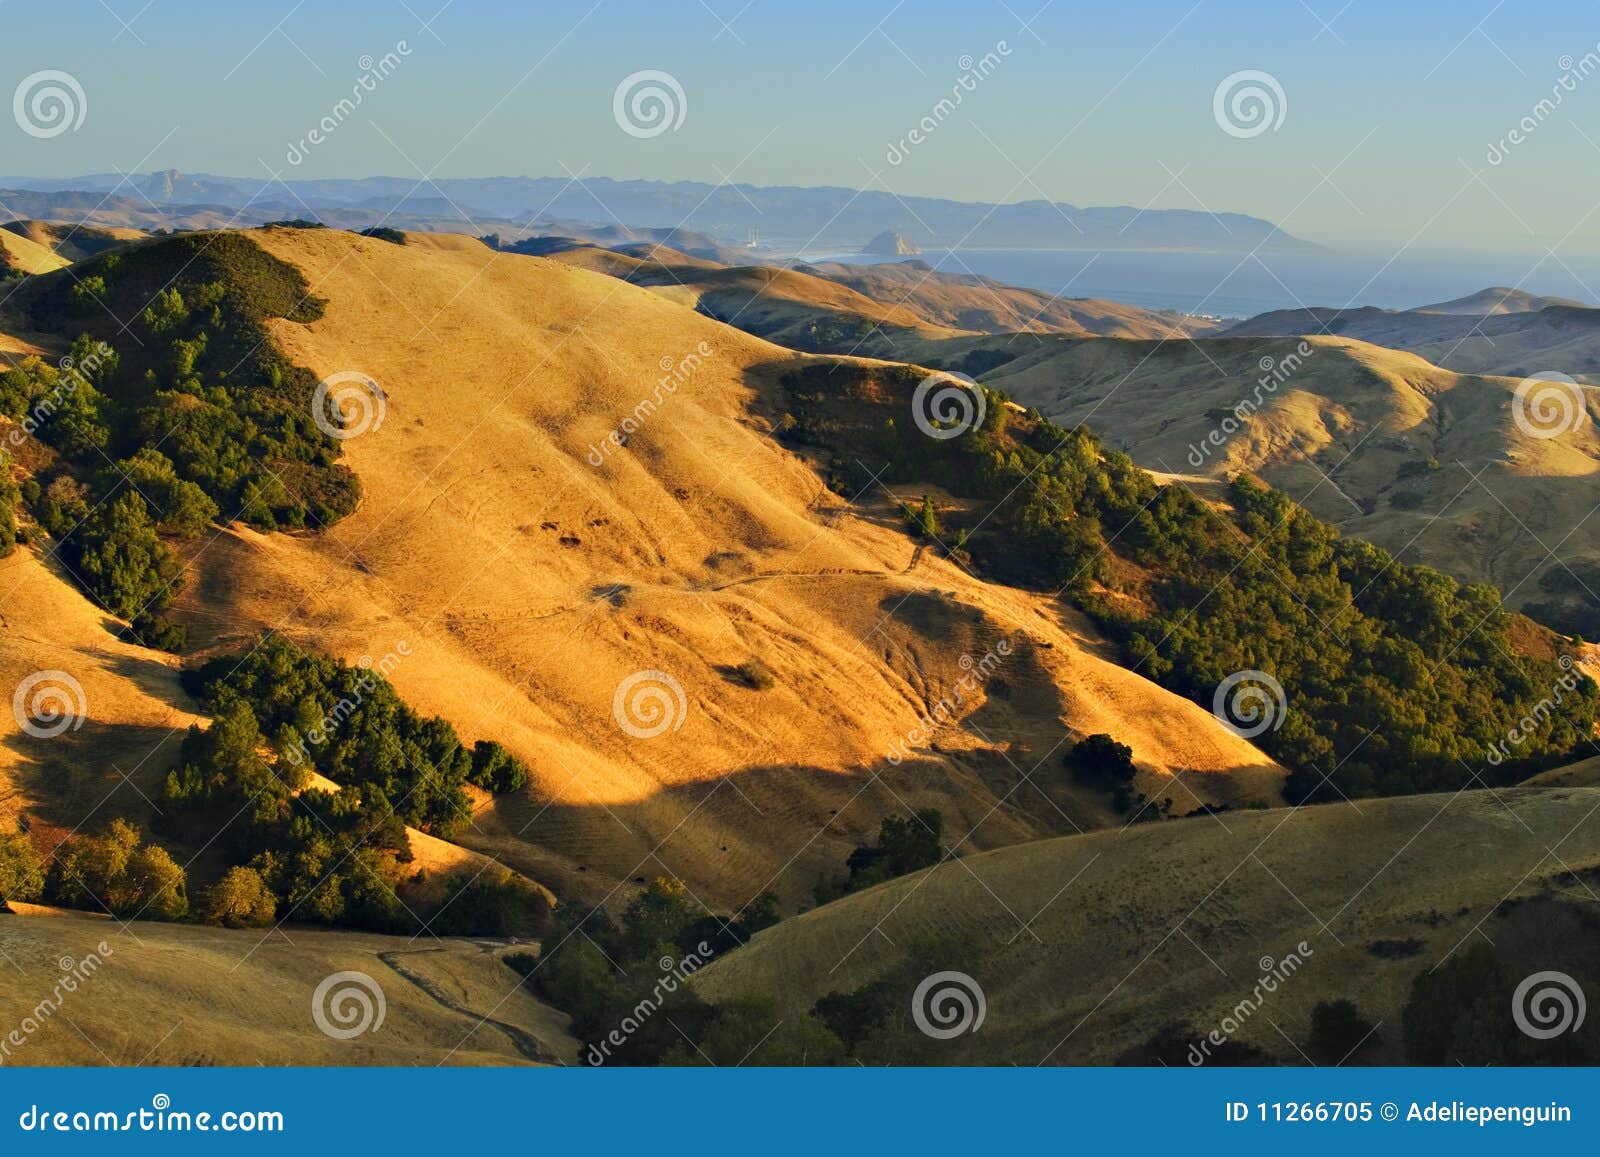 golden hills of california